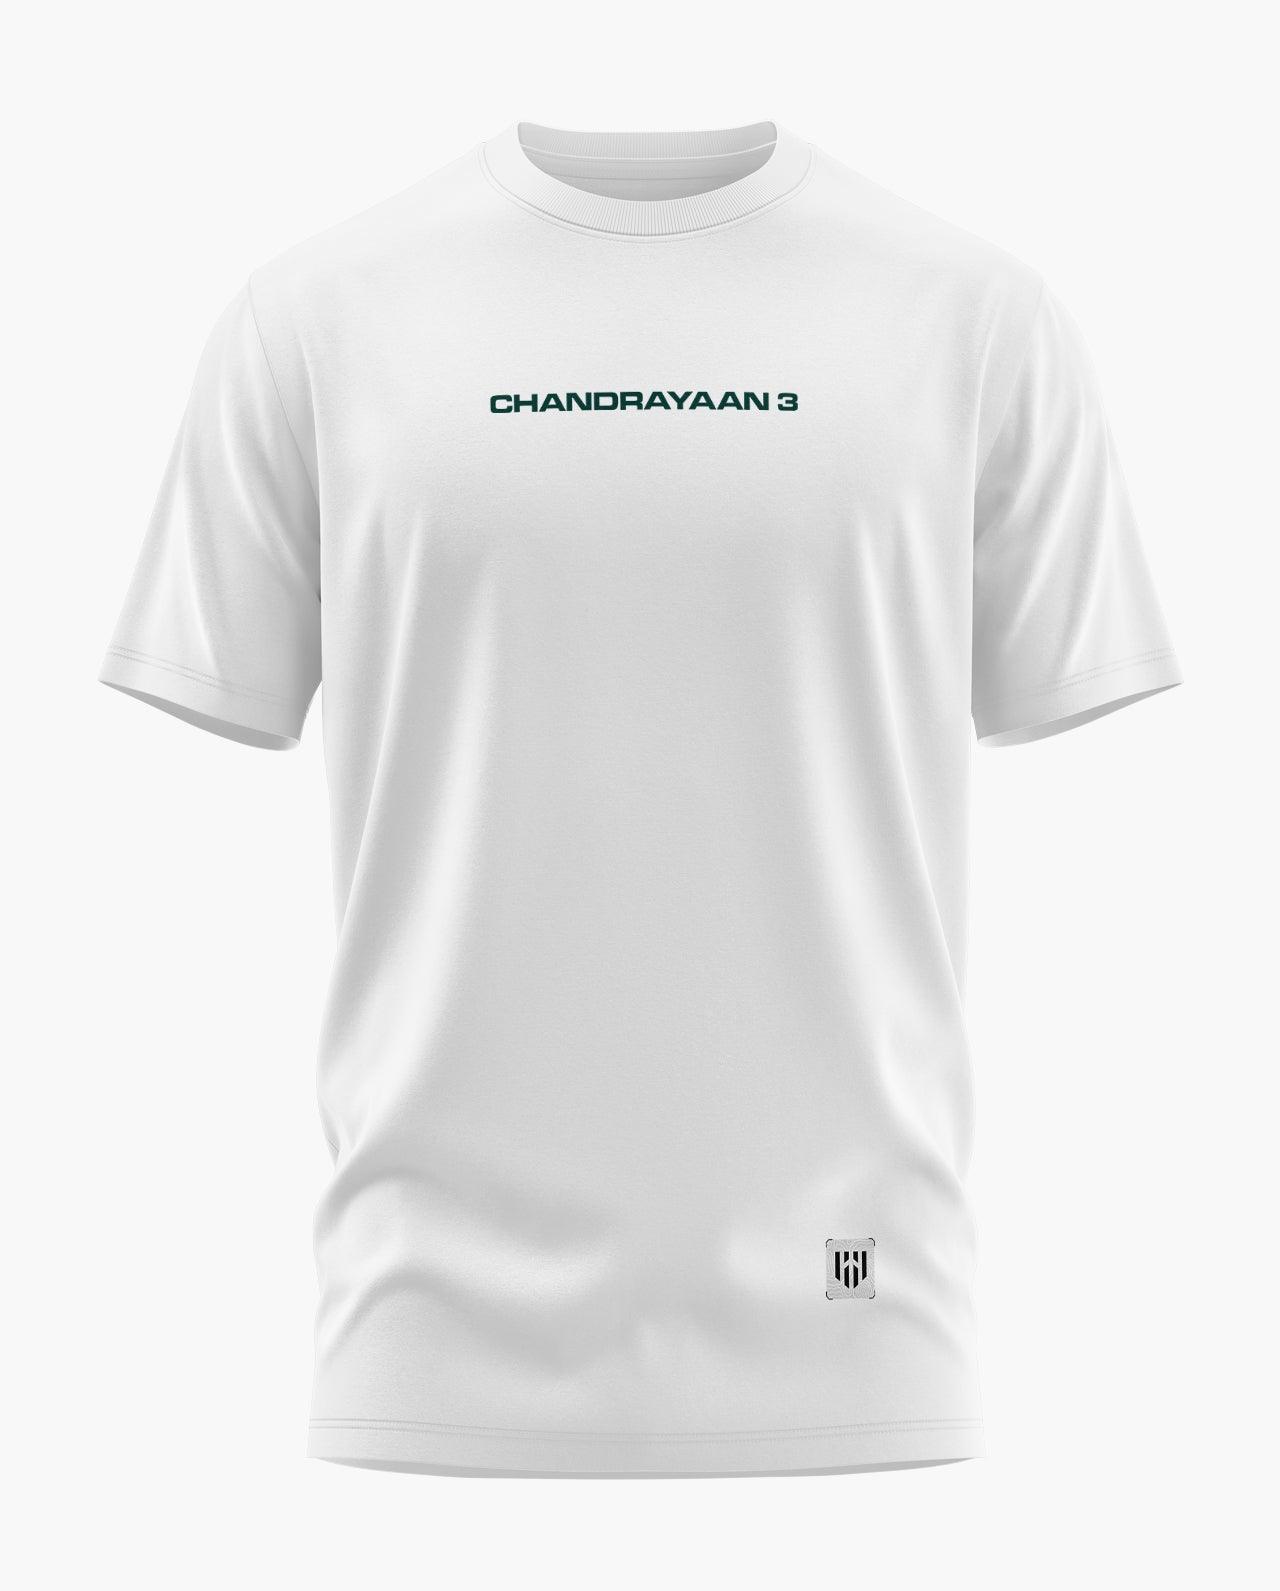 Milestone Chandrayan 3 T-Shirt - Aero Armour